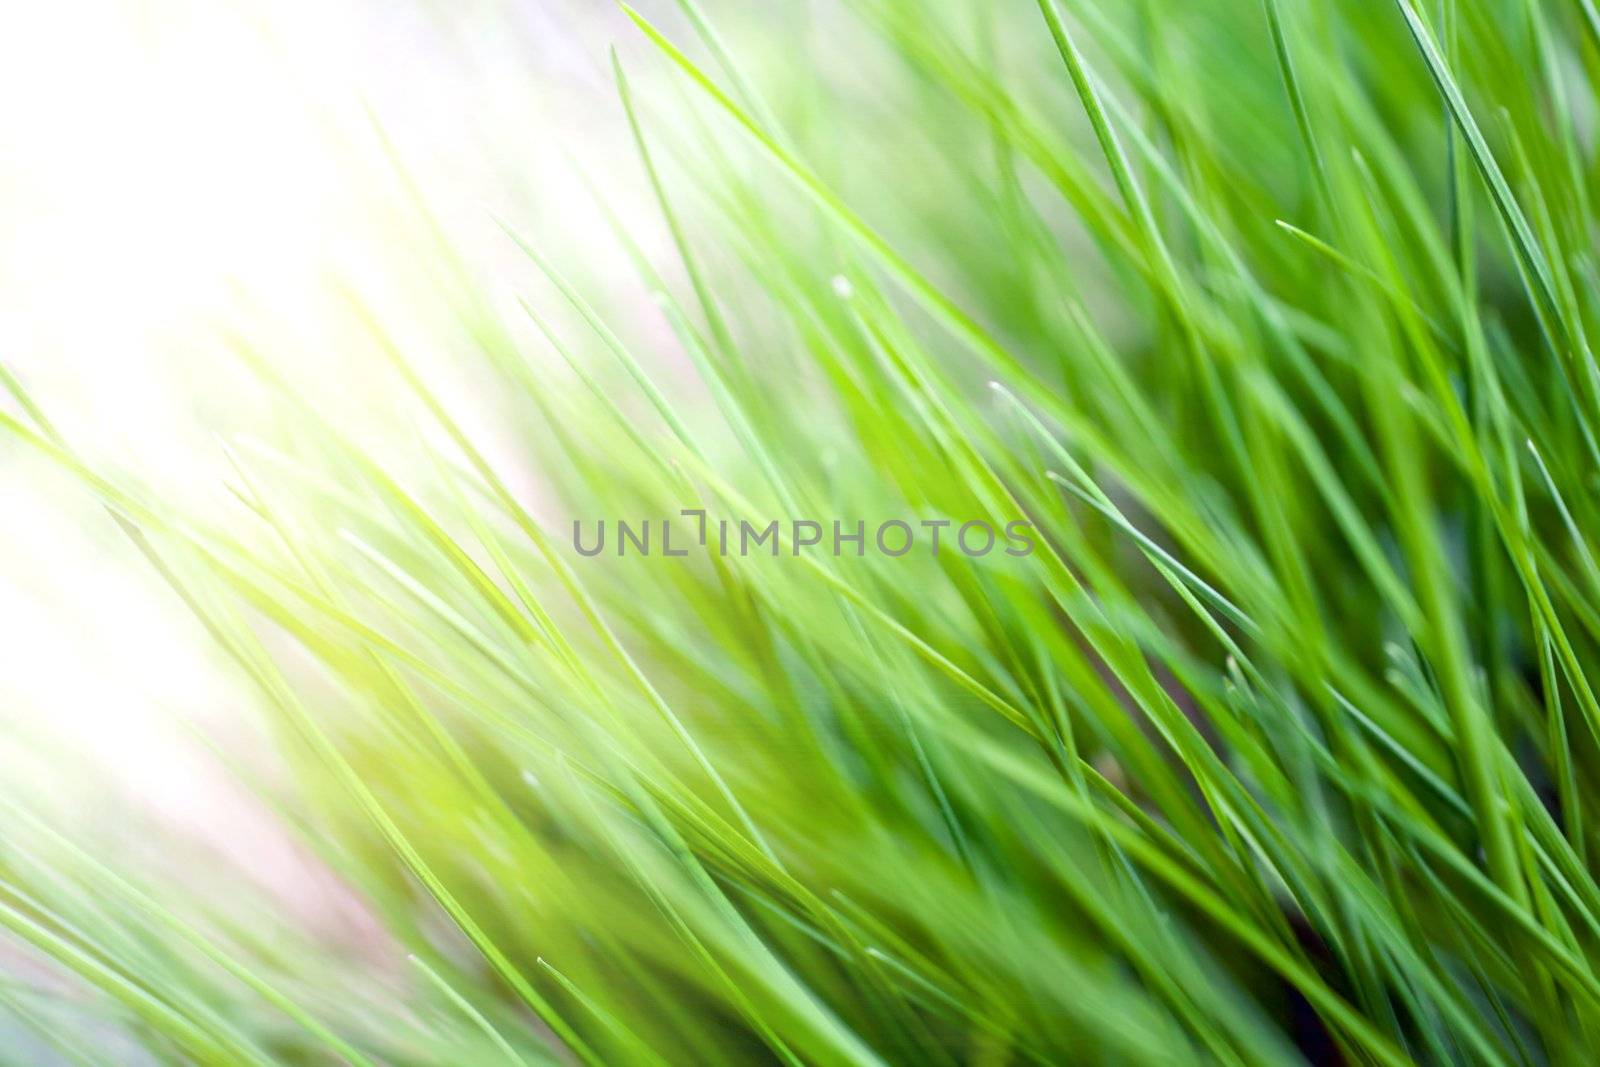 An image of lush green grass close-up